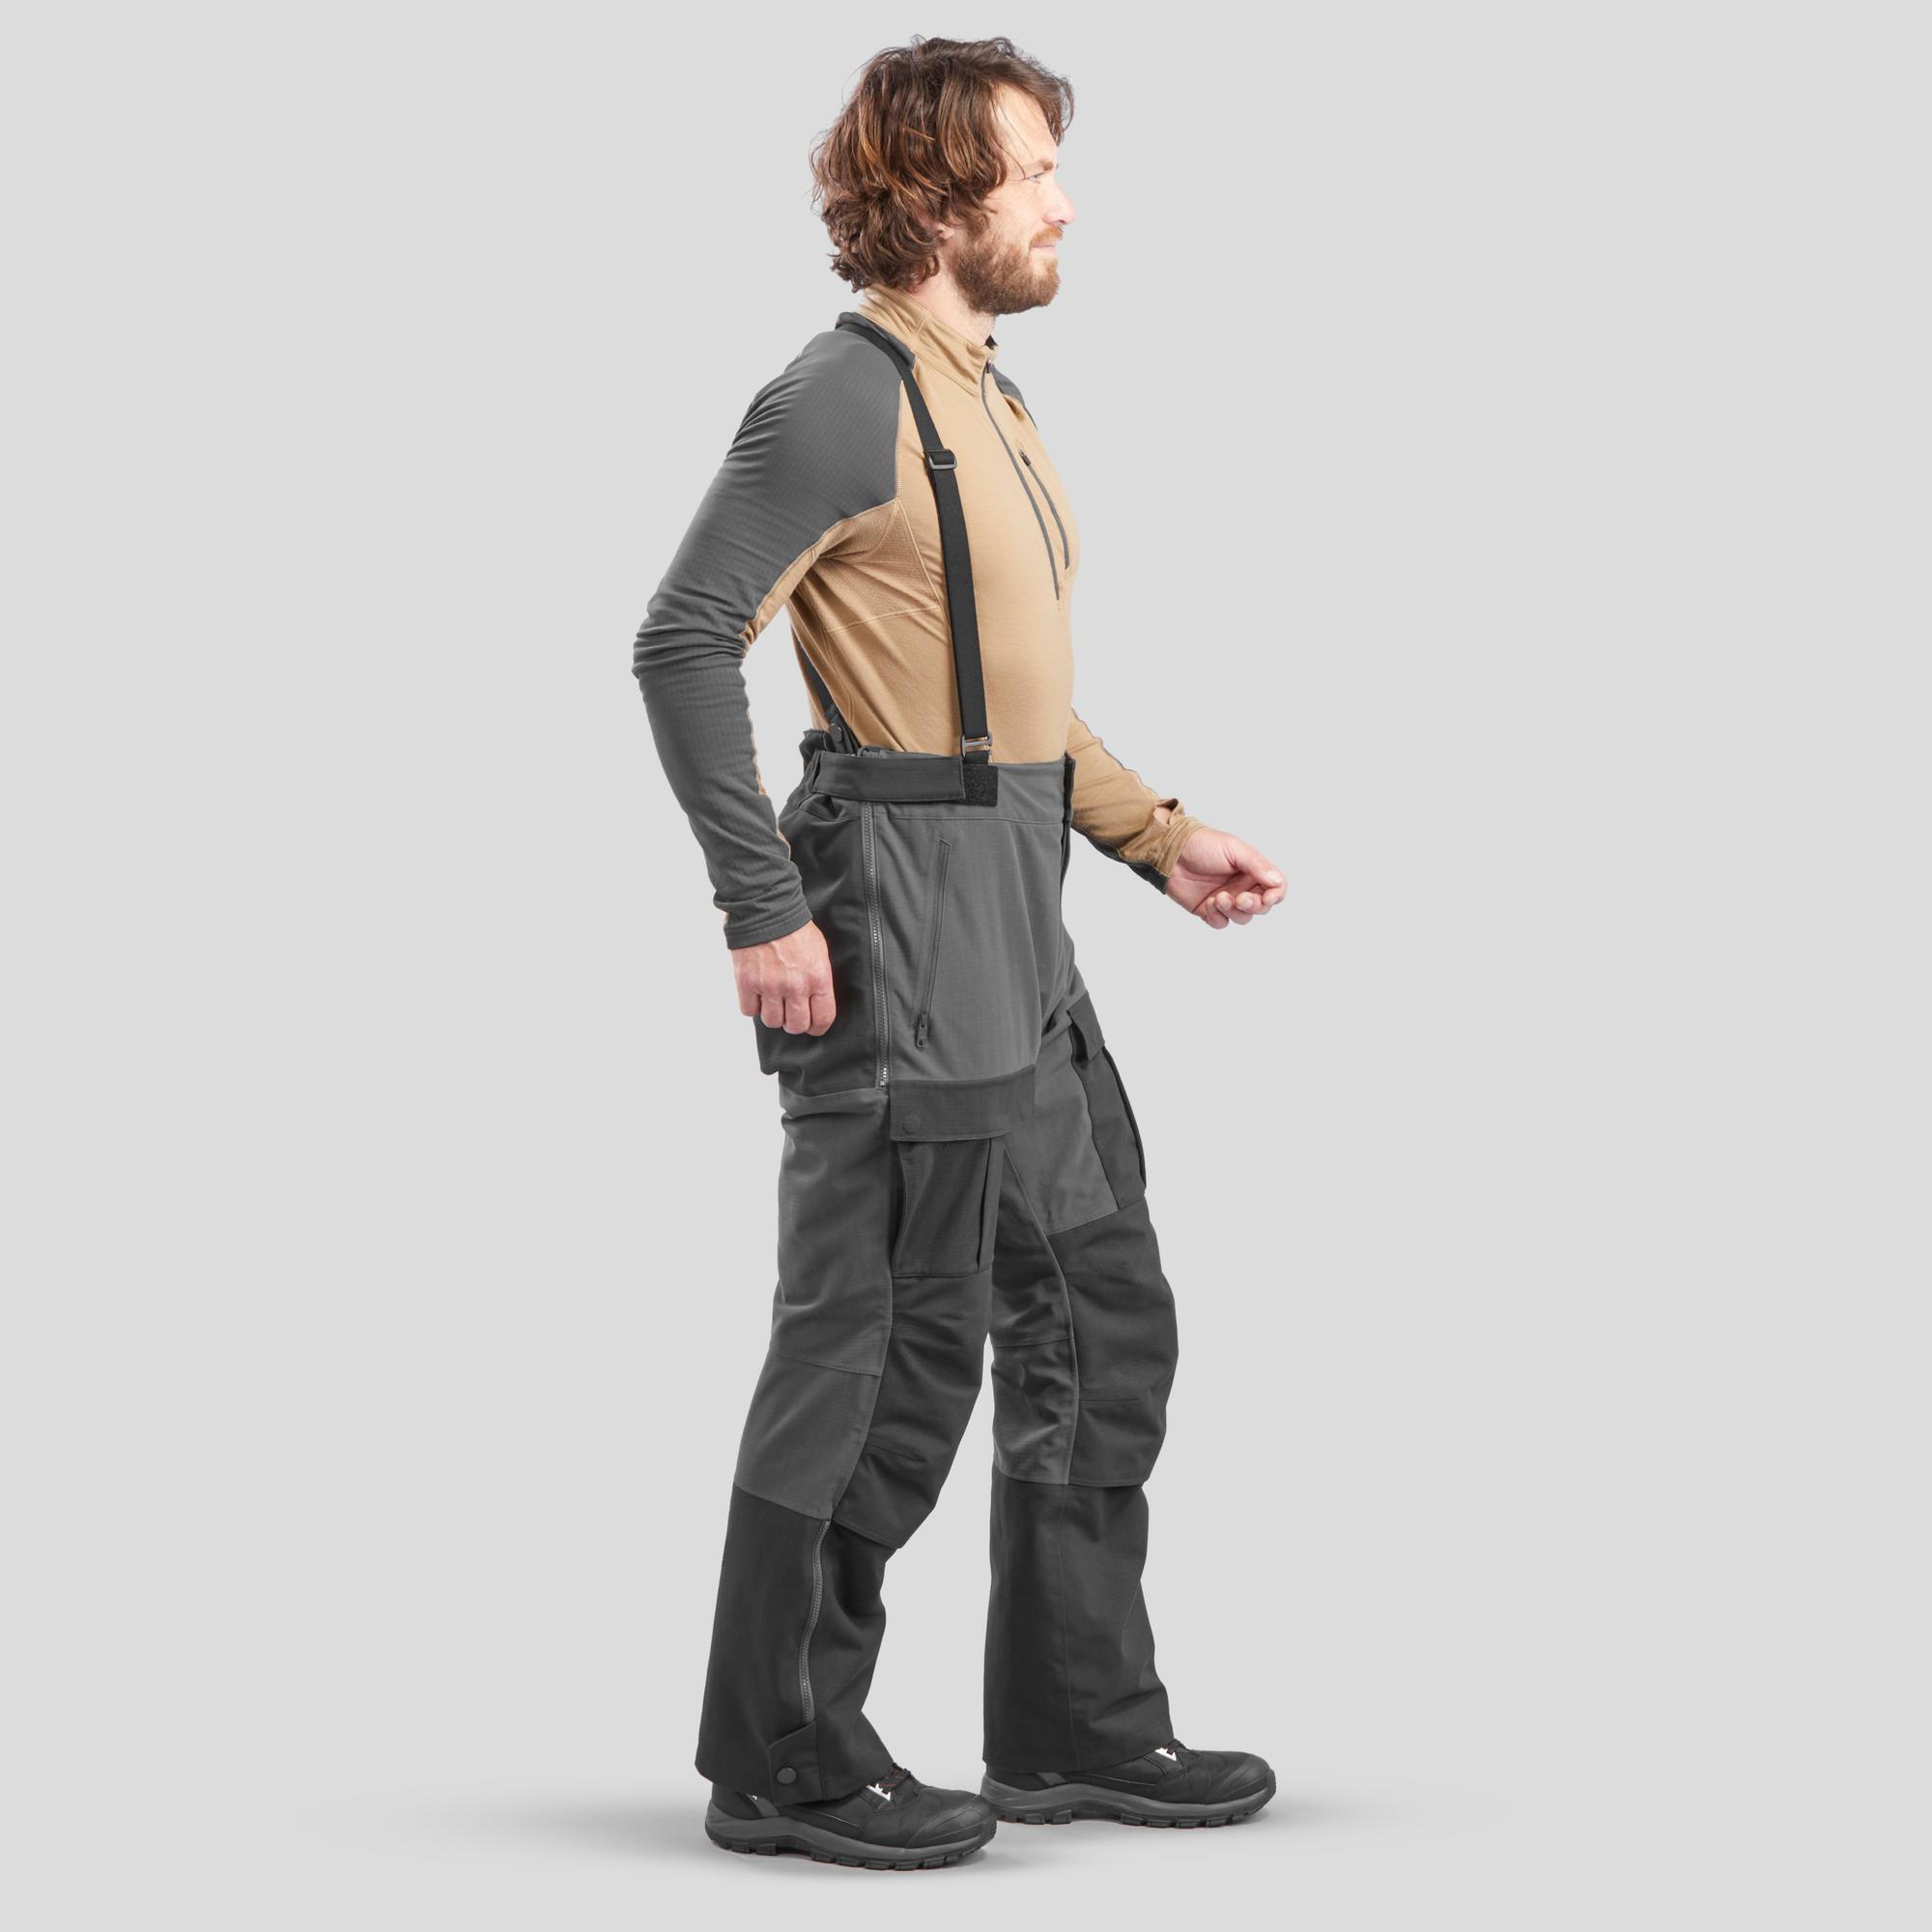 Warm and waterproof trekking trousers - Artic 900 - unisex 4/19